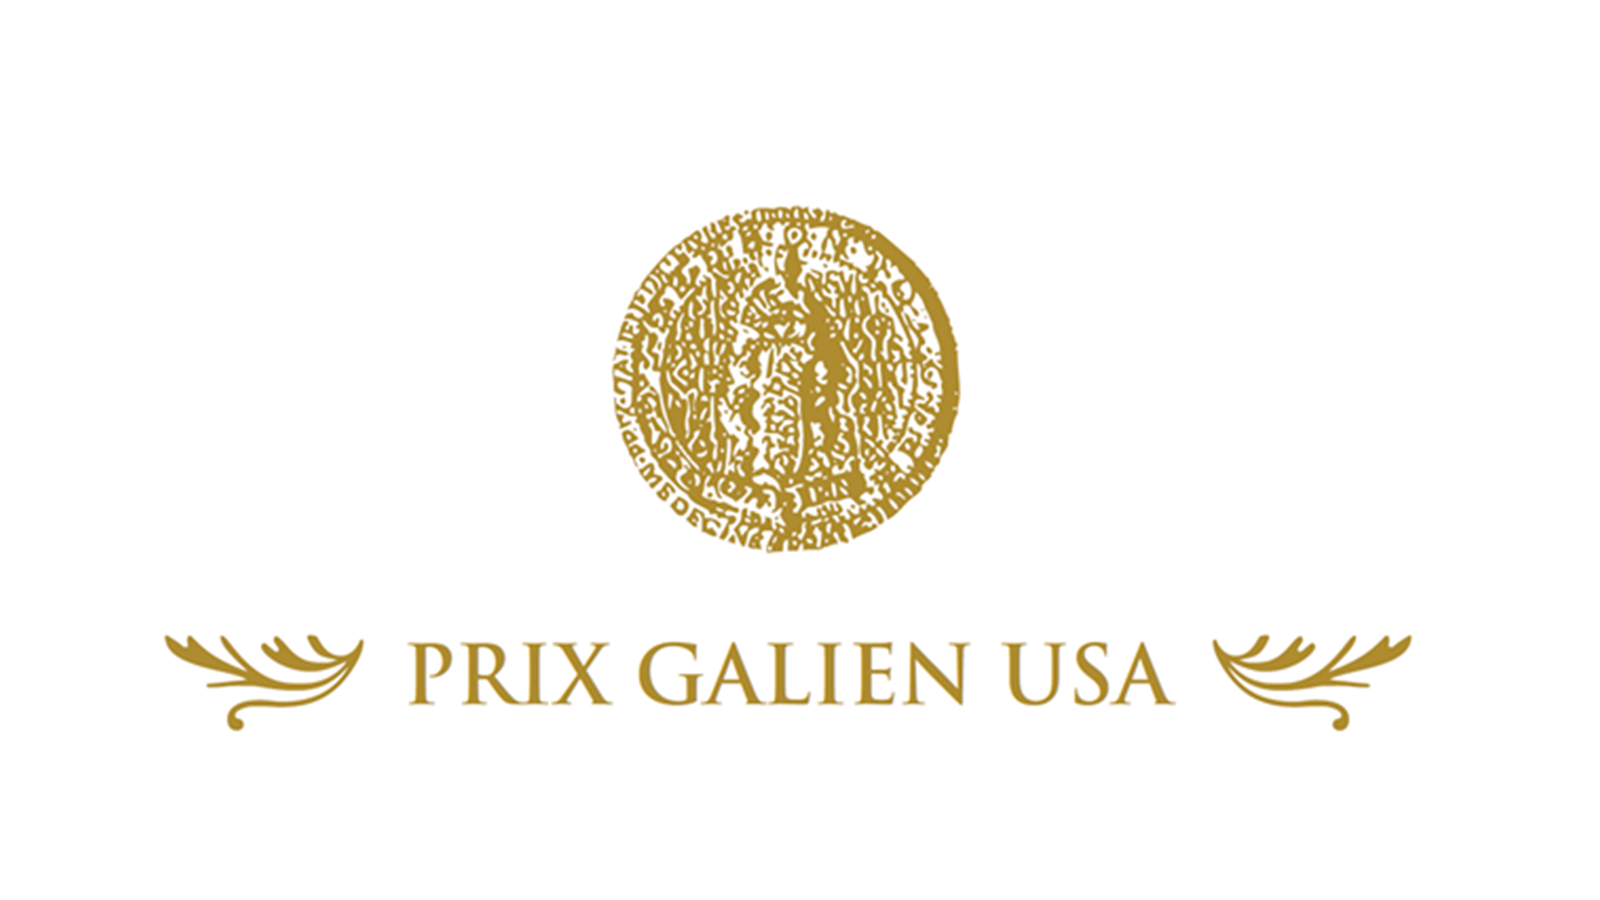 Prix Galien USA logo and medal